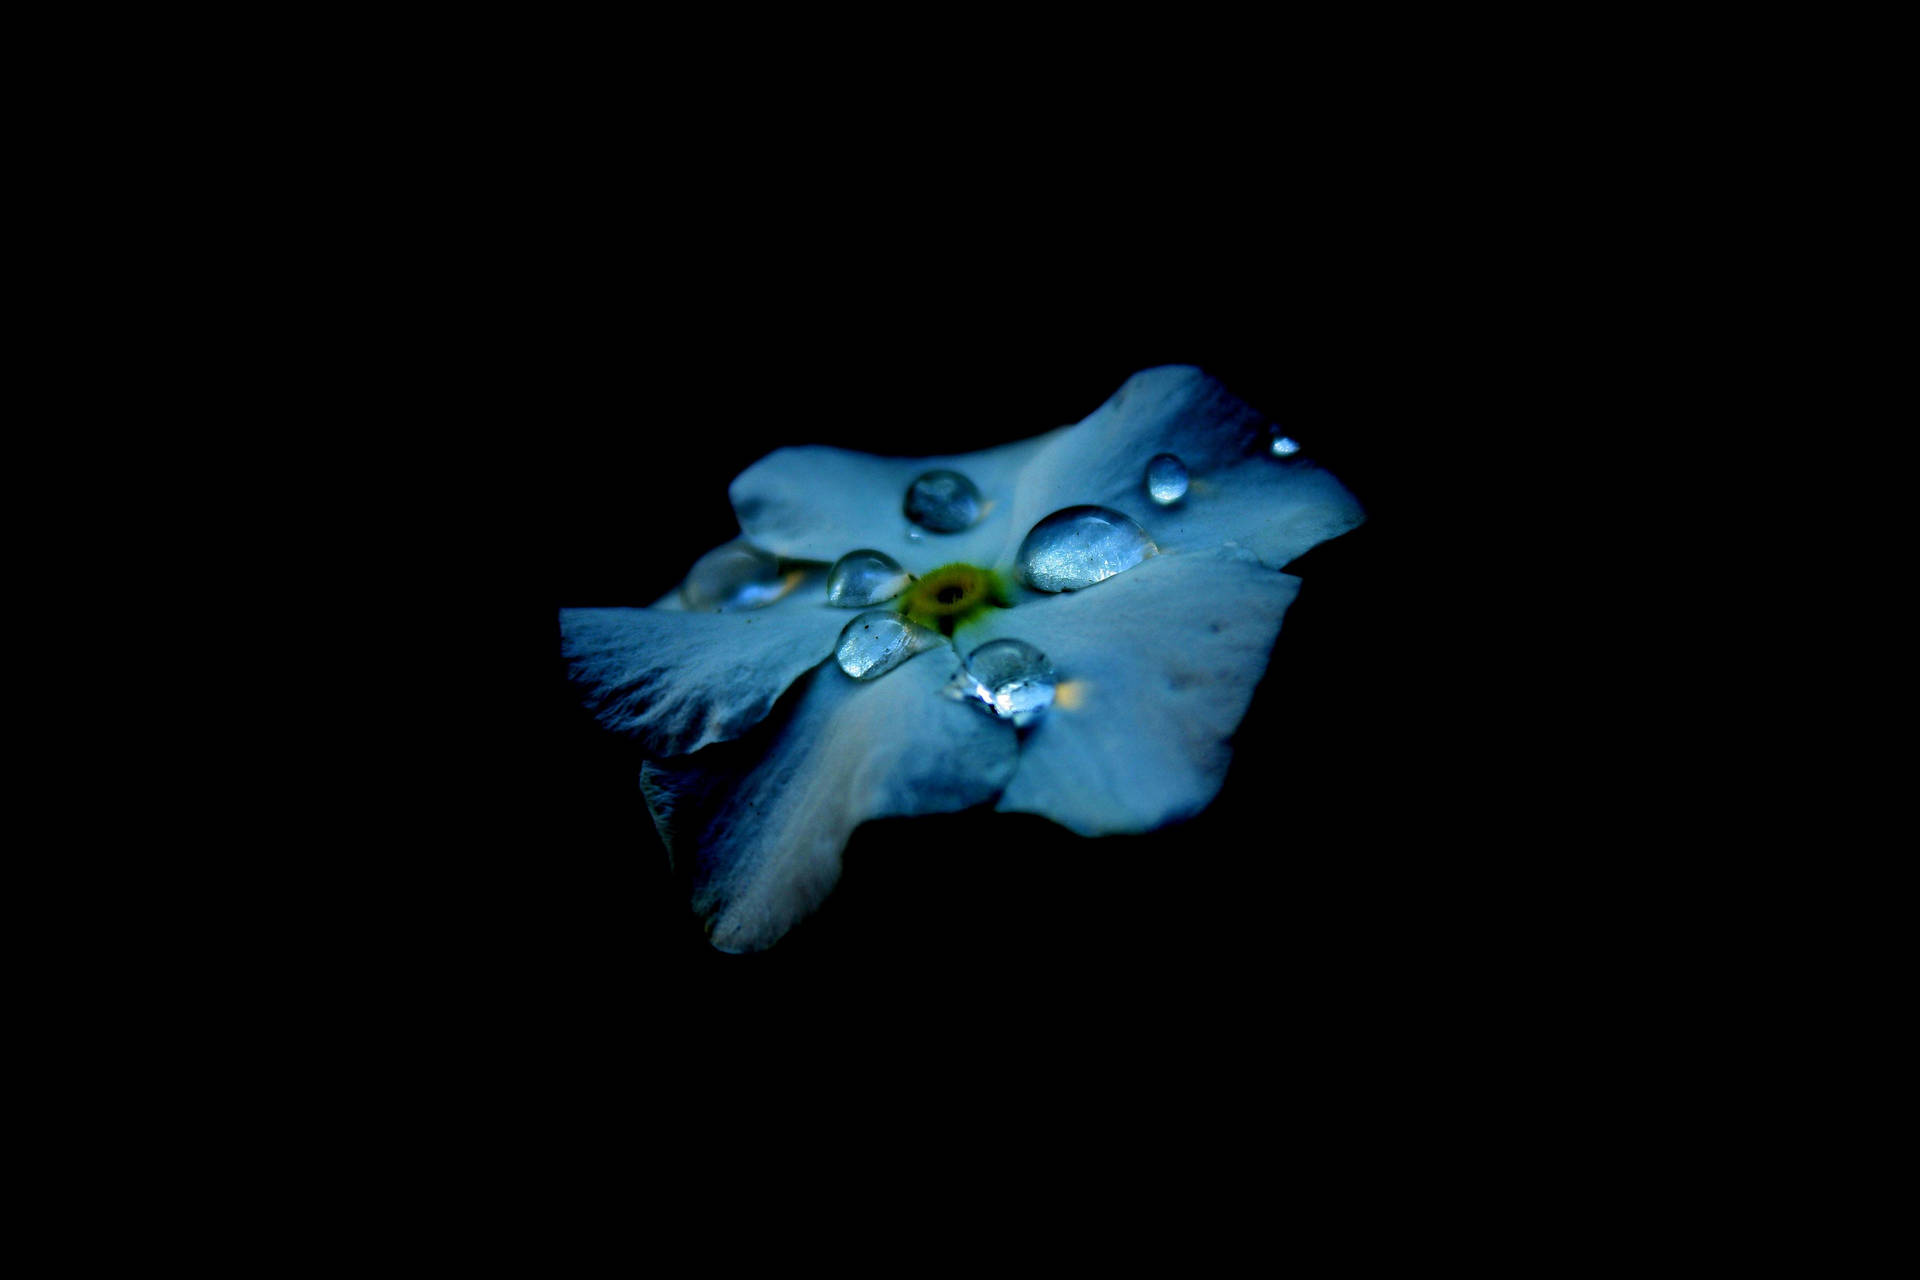 Vibrant Blue Flower Under Raindrops Displayed On Best Oled Screen Background